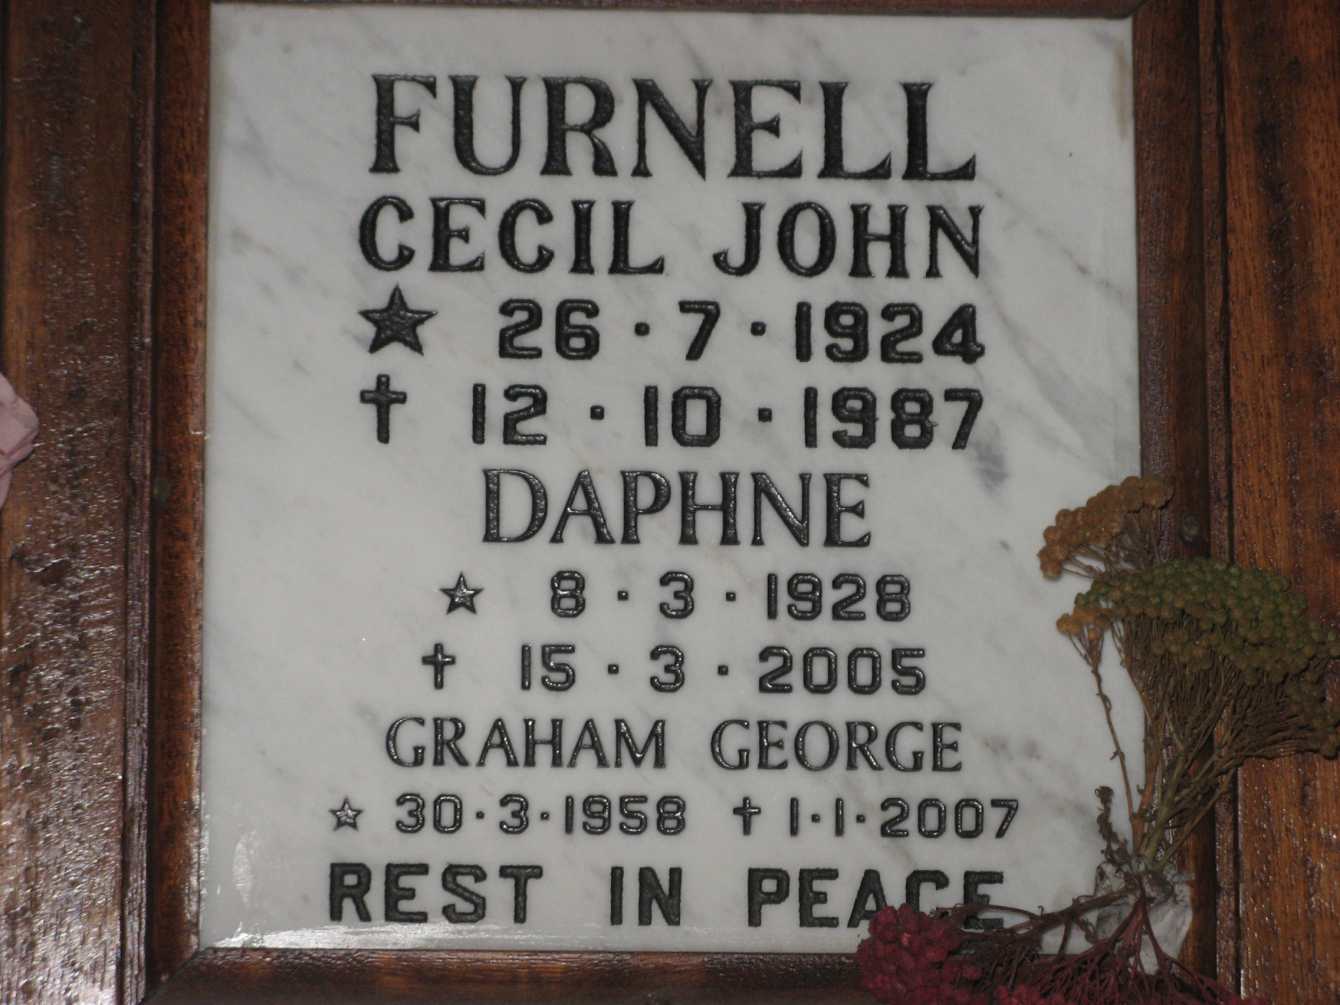 FURNELL Cecil John 1924-1987 & Daphne 1928-2005 :: FURNELL Graham George 1958-2007